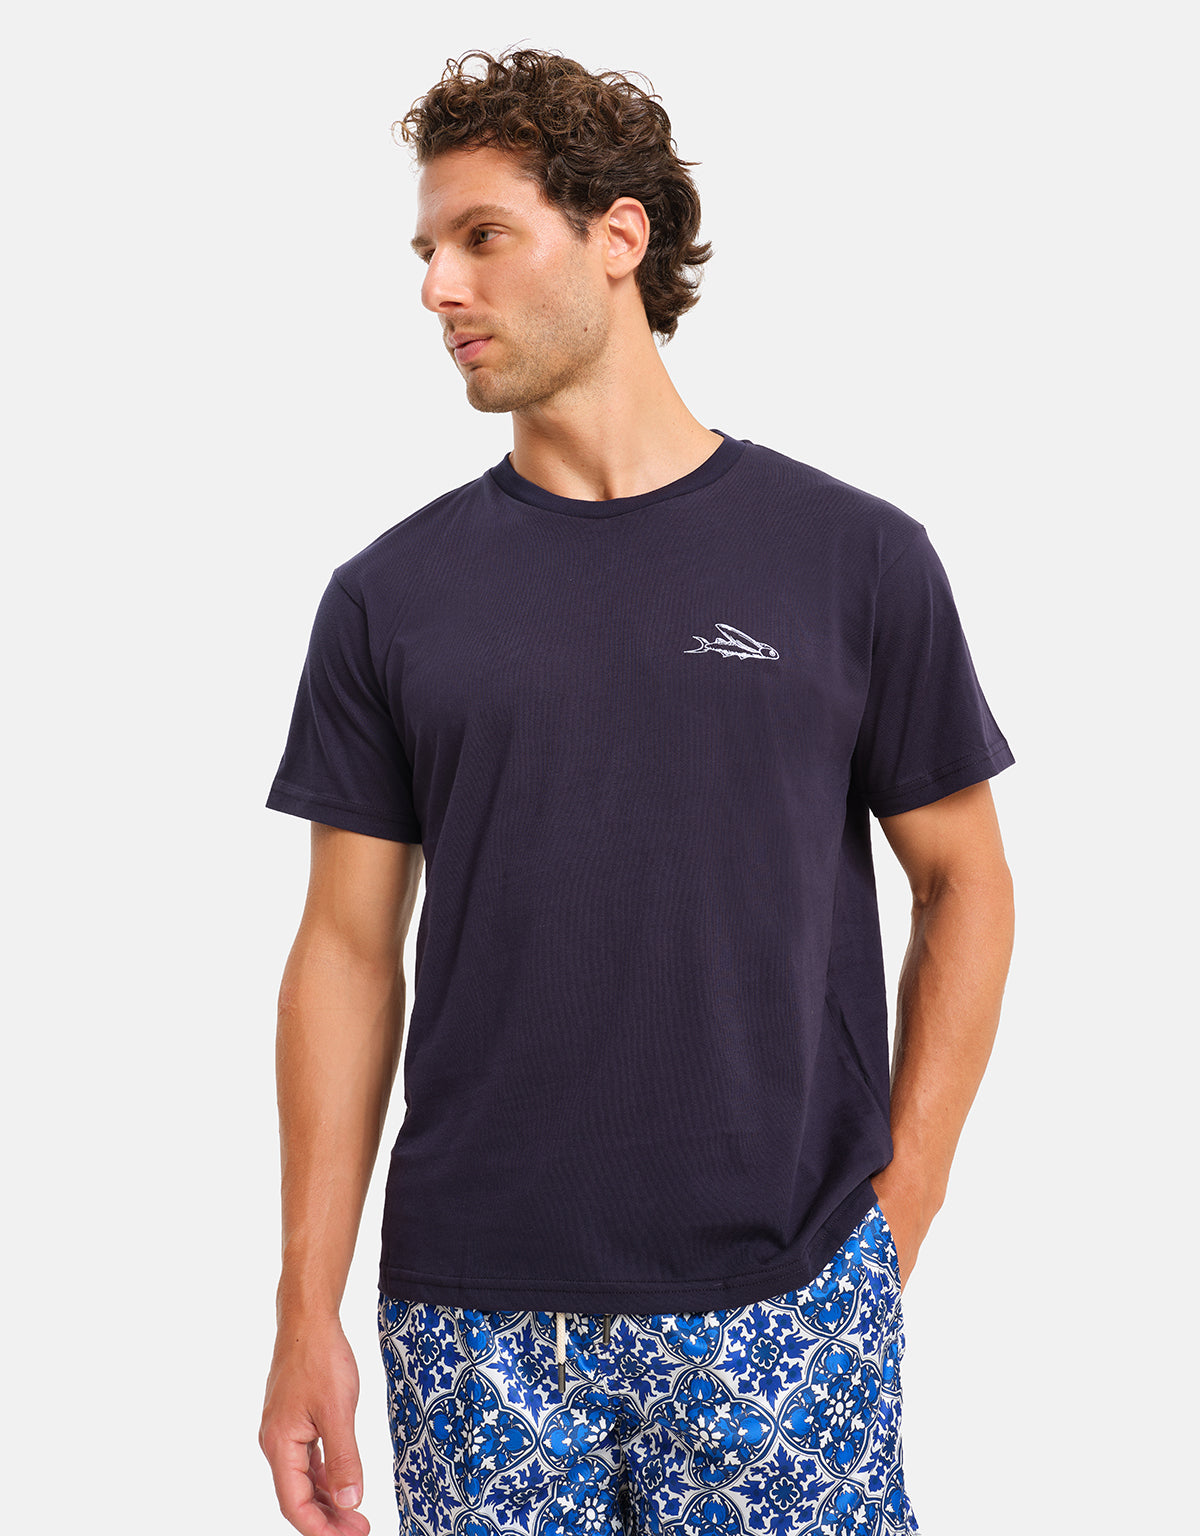 Stromboli Cotton Embroidery T-Shirt